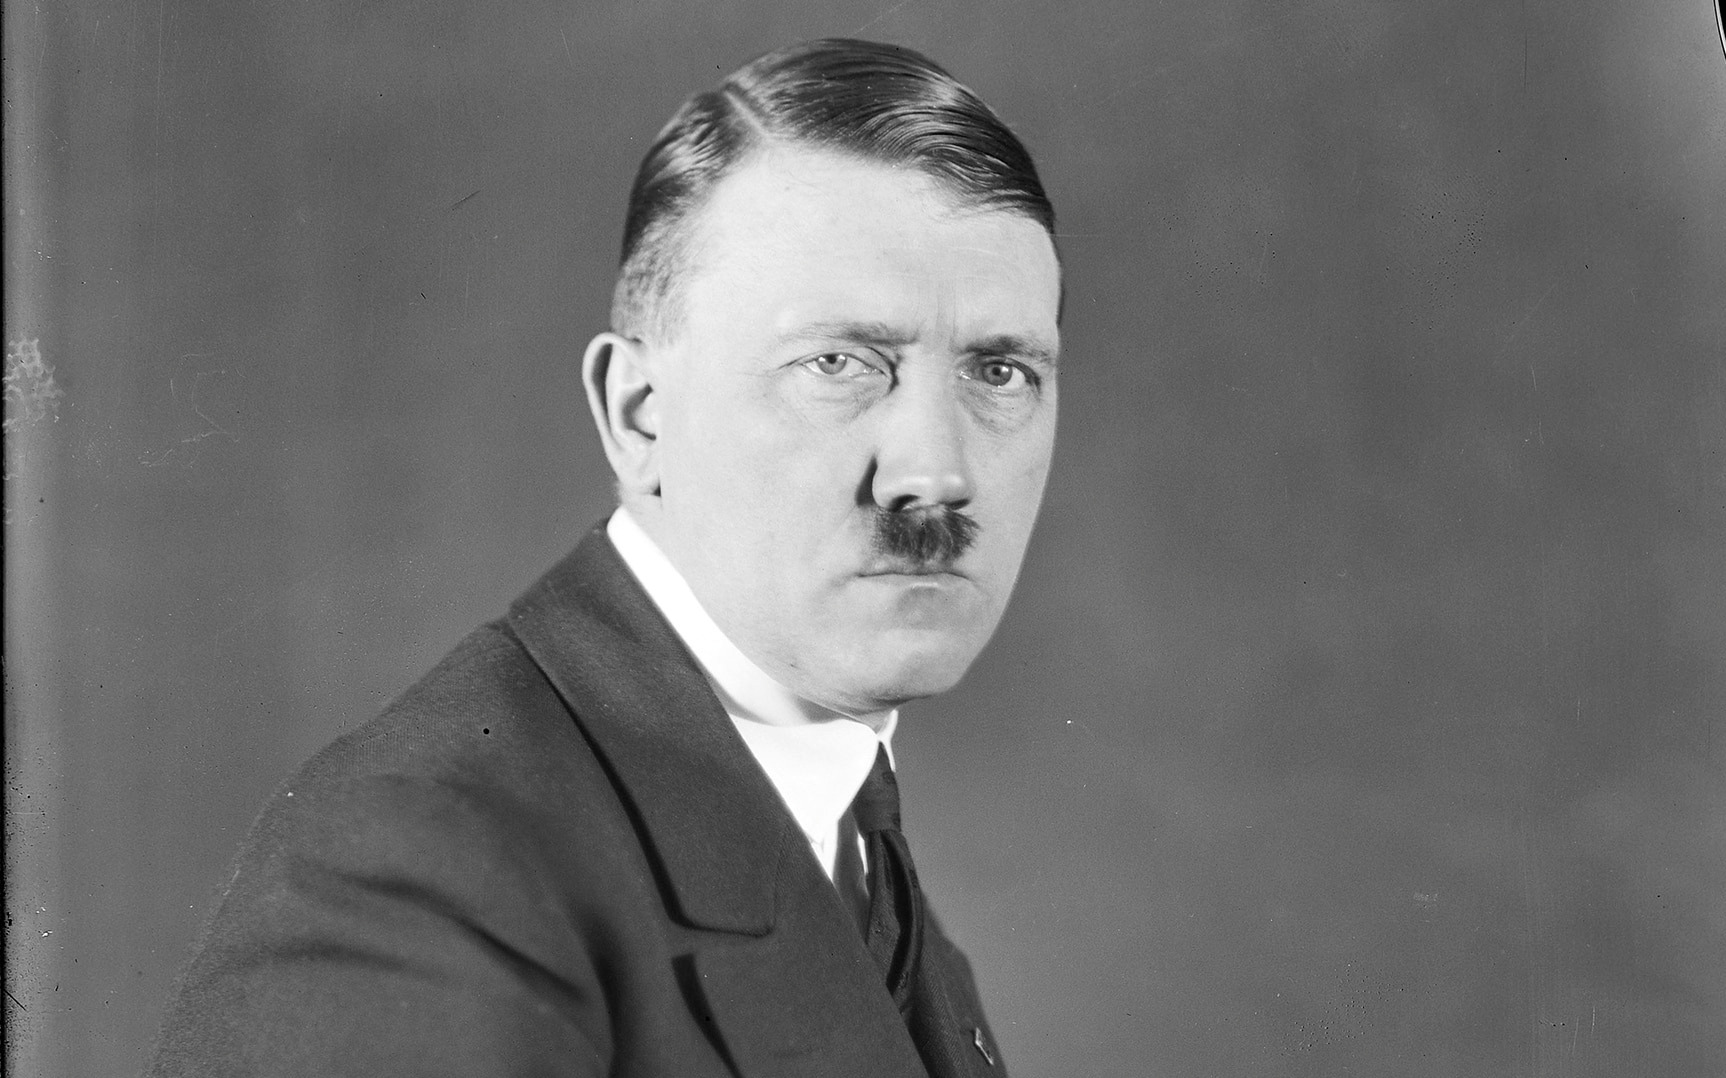 El destino final de Hitler